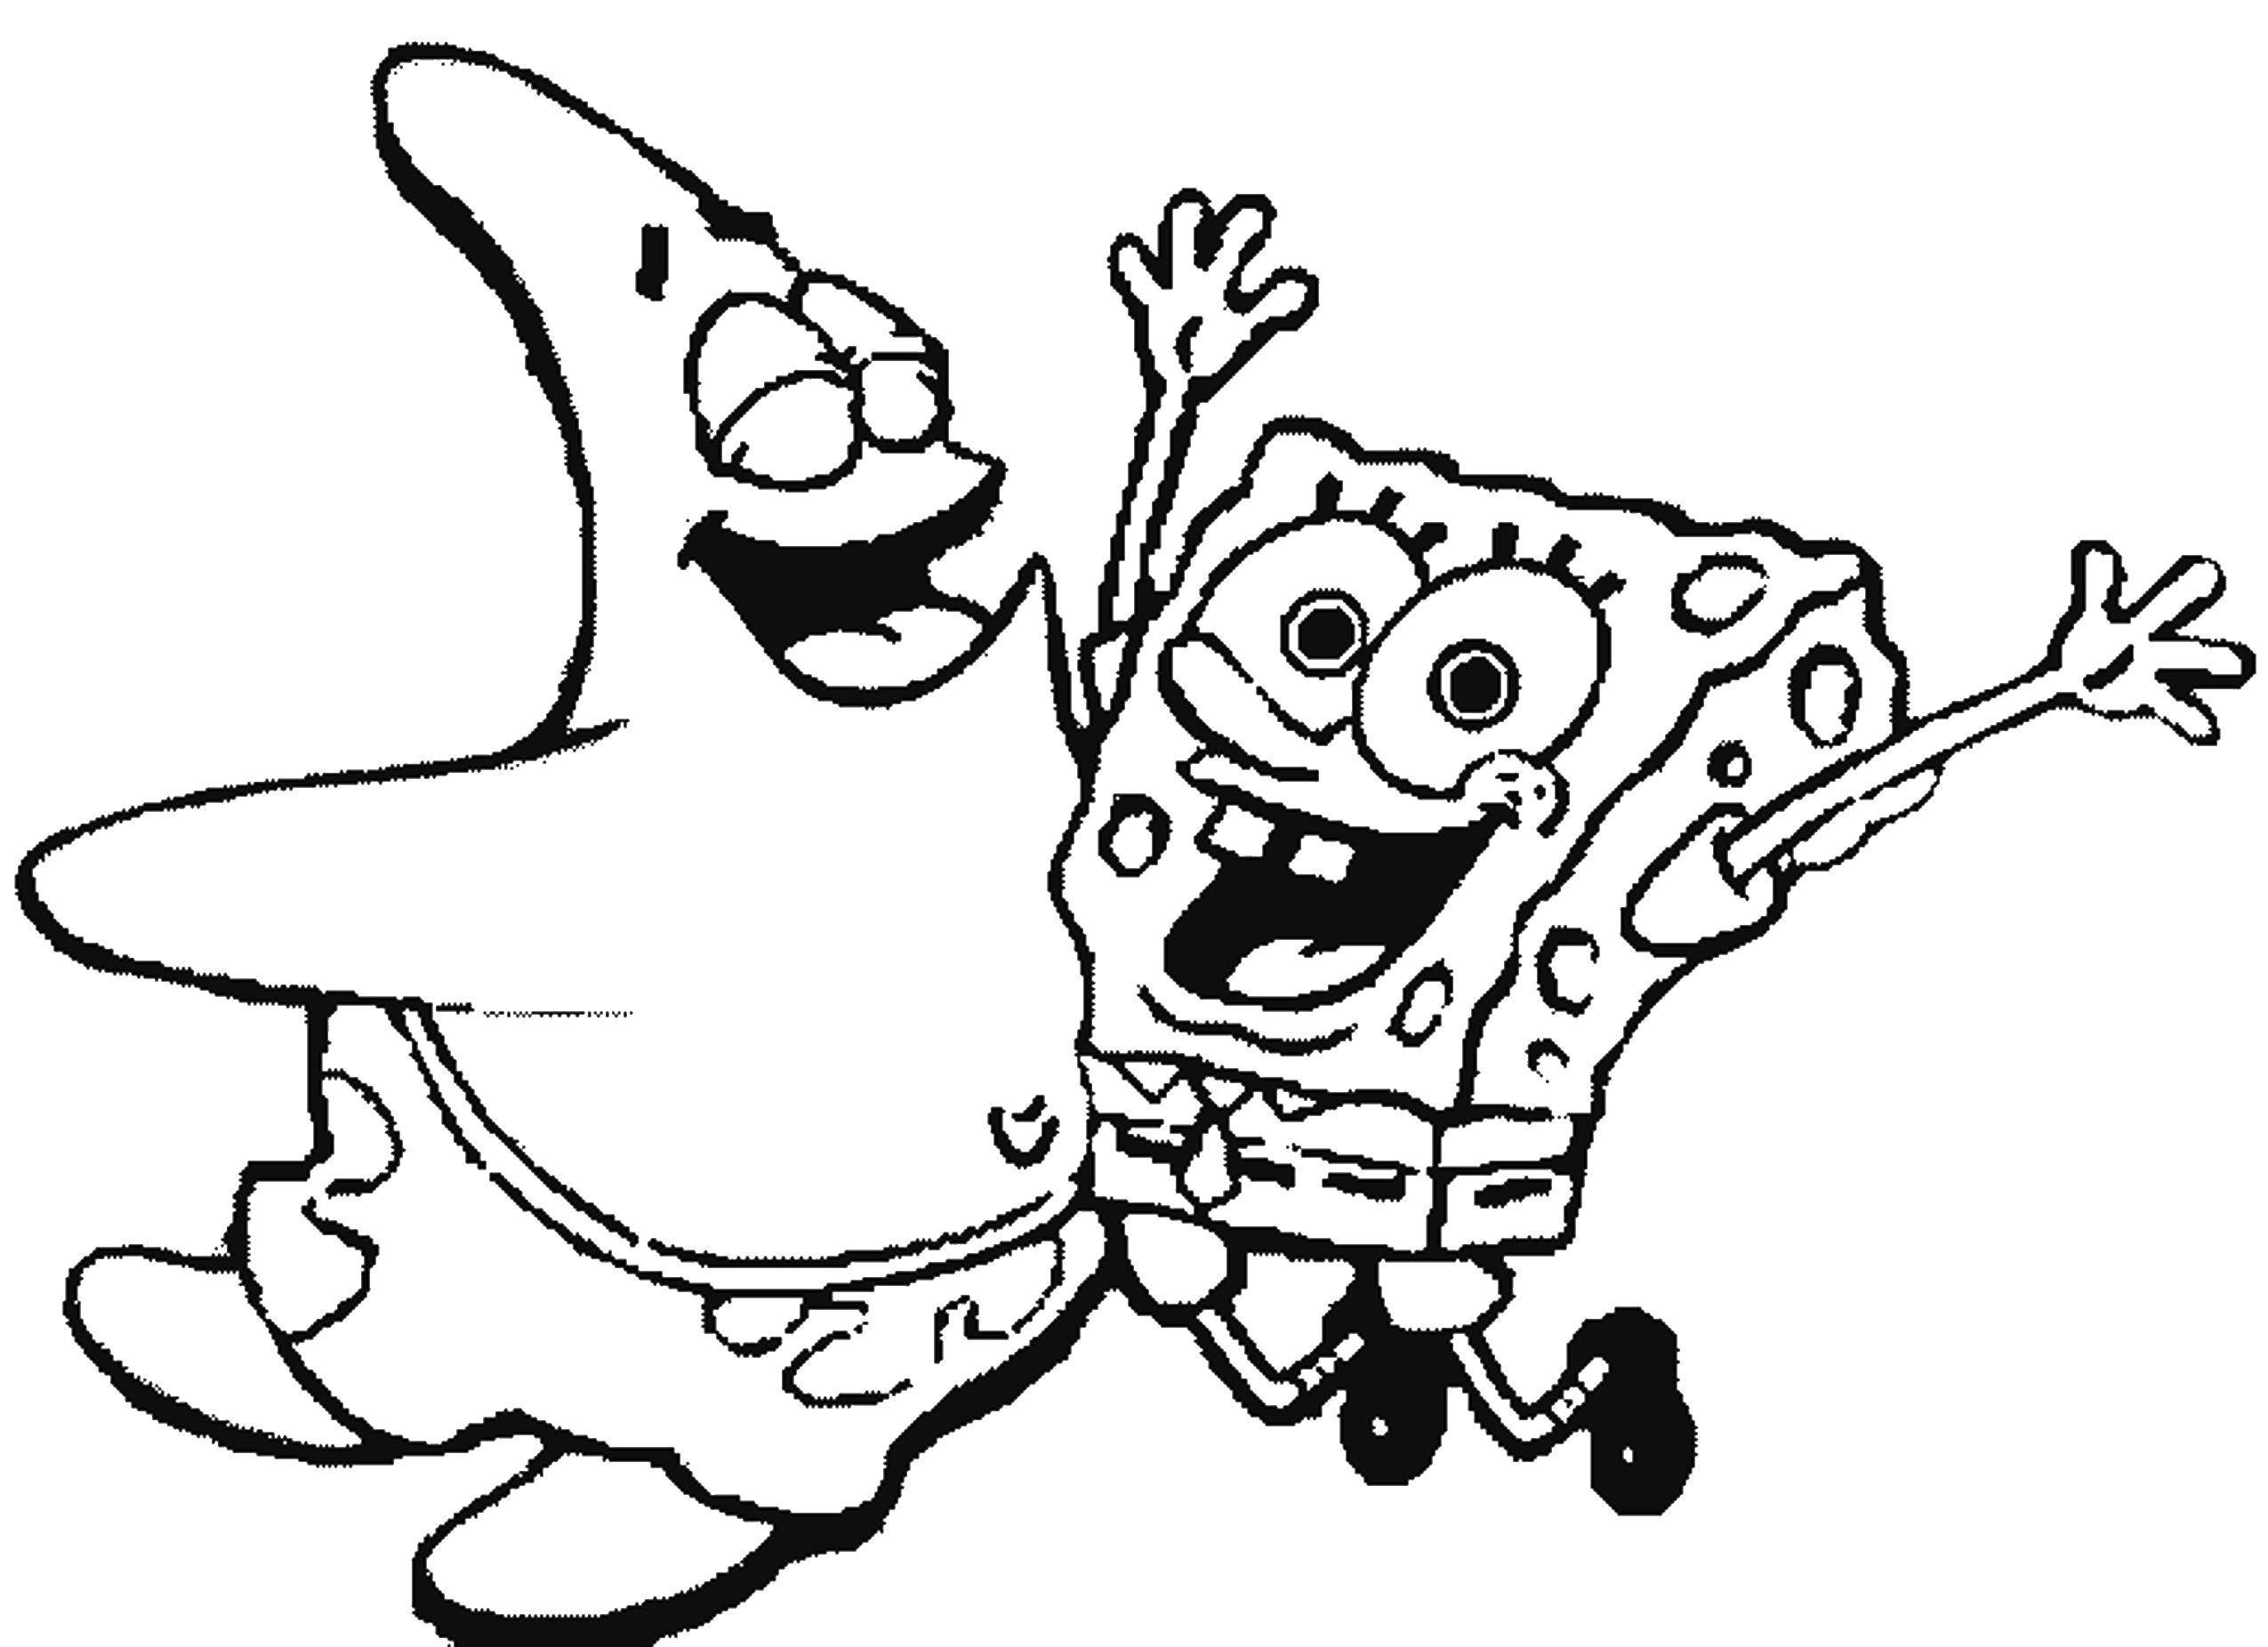 Coloring Spongebob and Patrick. Category Spongebob. Tags:  cartoons, spongebob, Patrick.